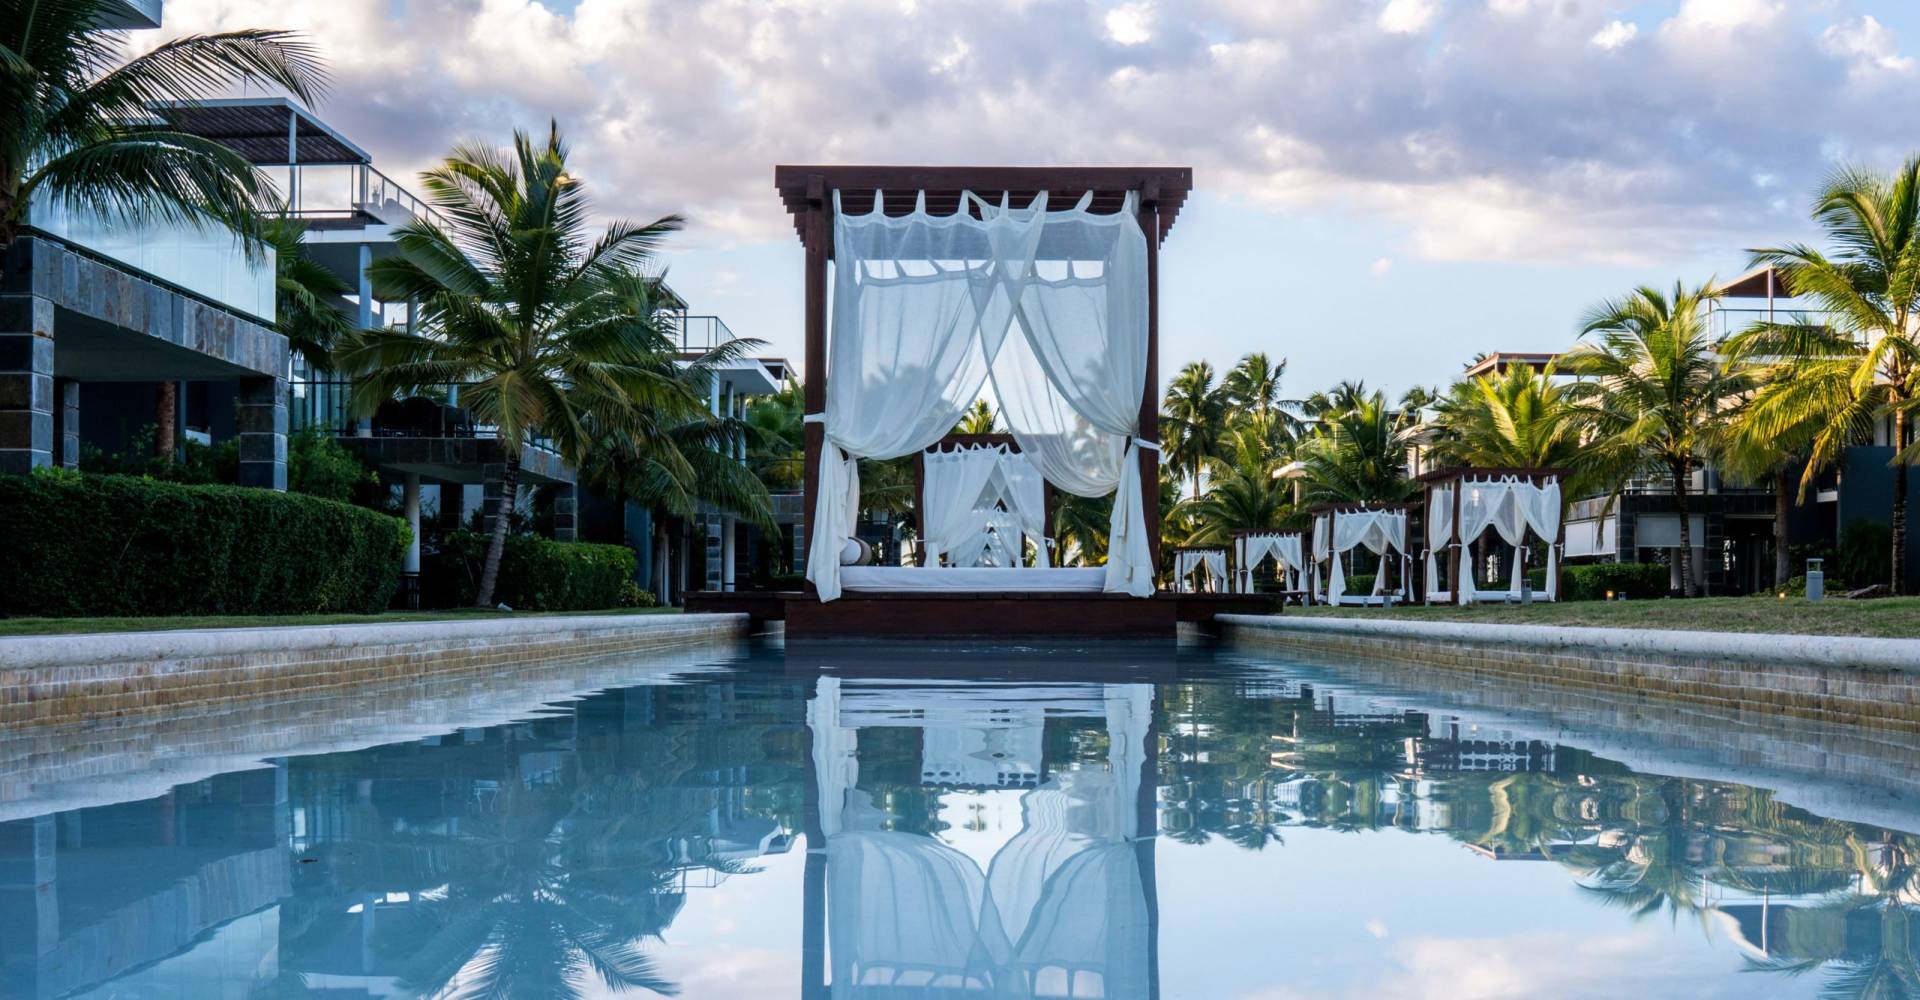 Dominikanische Republik, Sublime Samana, Hotelanlage mit Pool, Latin America Tours